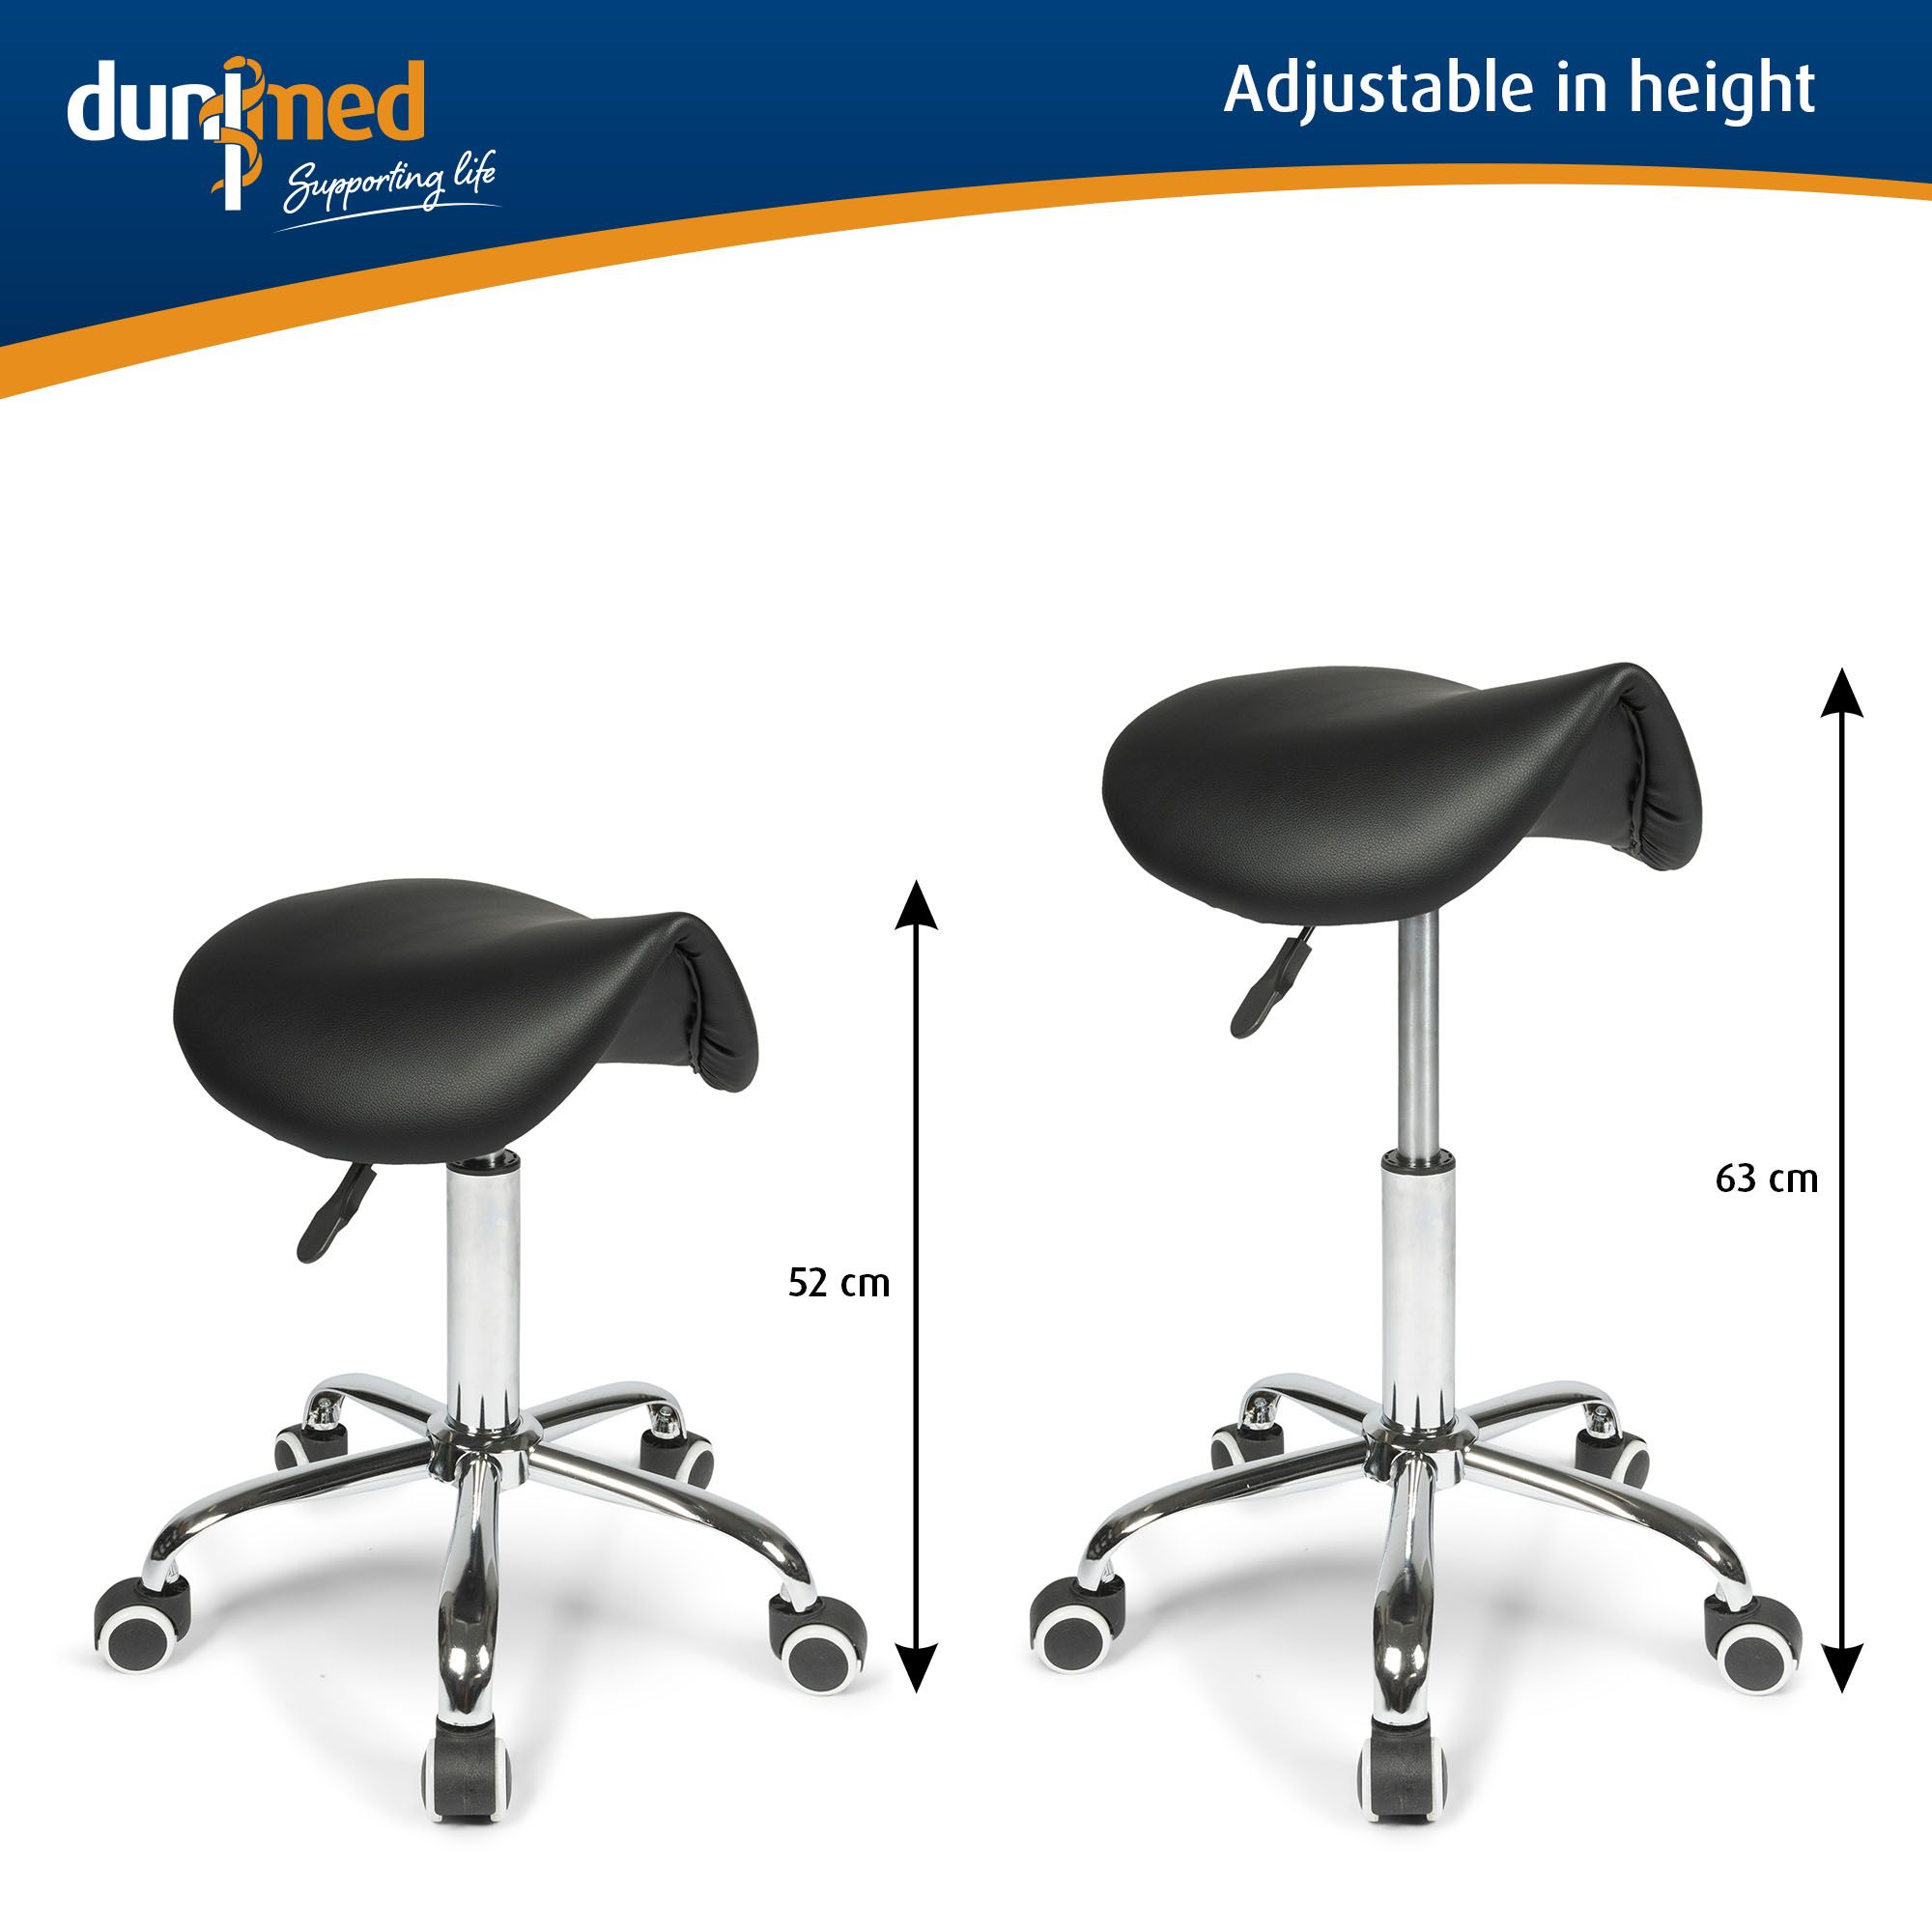 Dunimed - Ergonomic Saddle Stool - Black adjustable in height